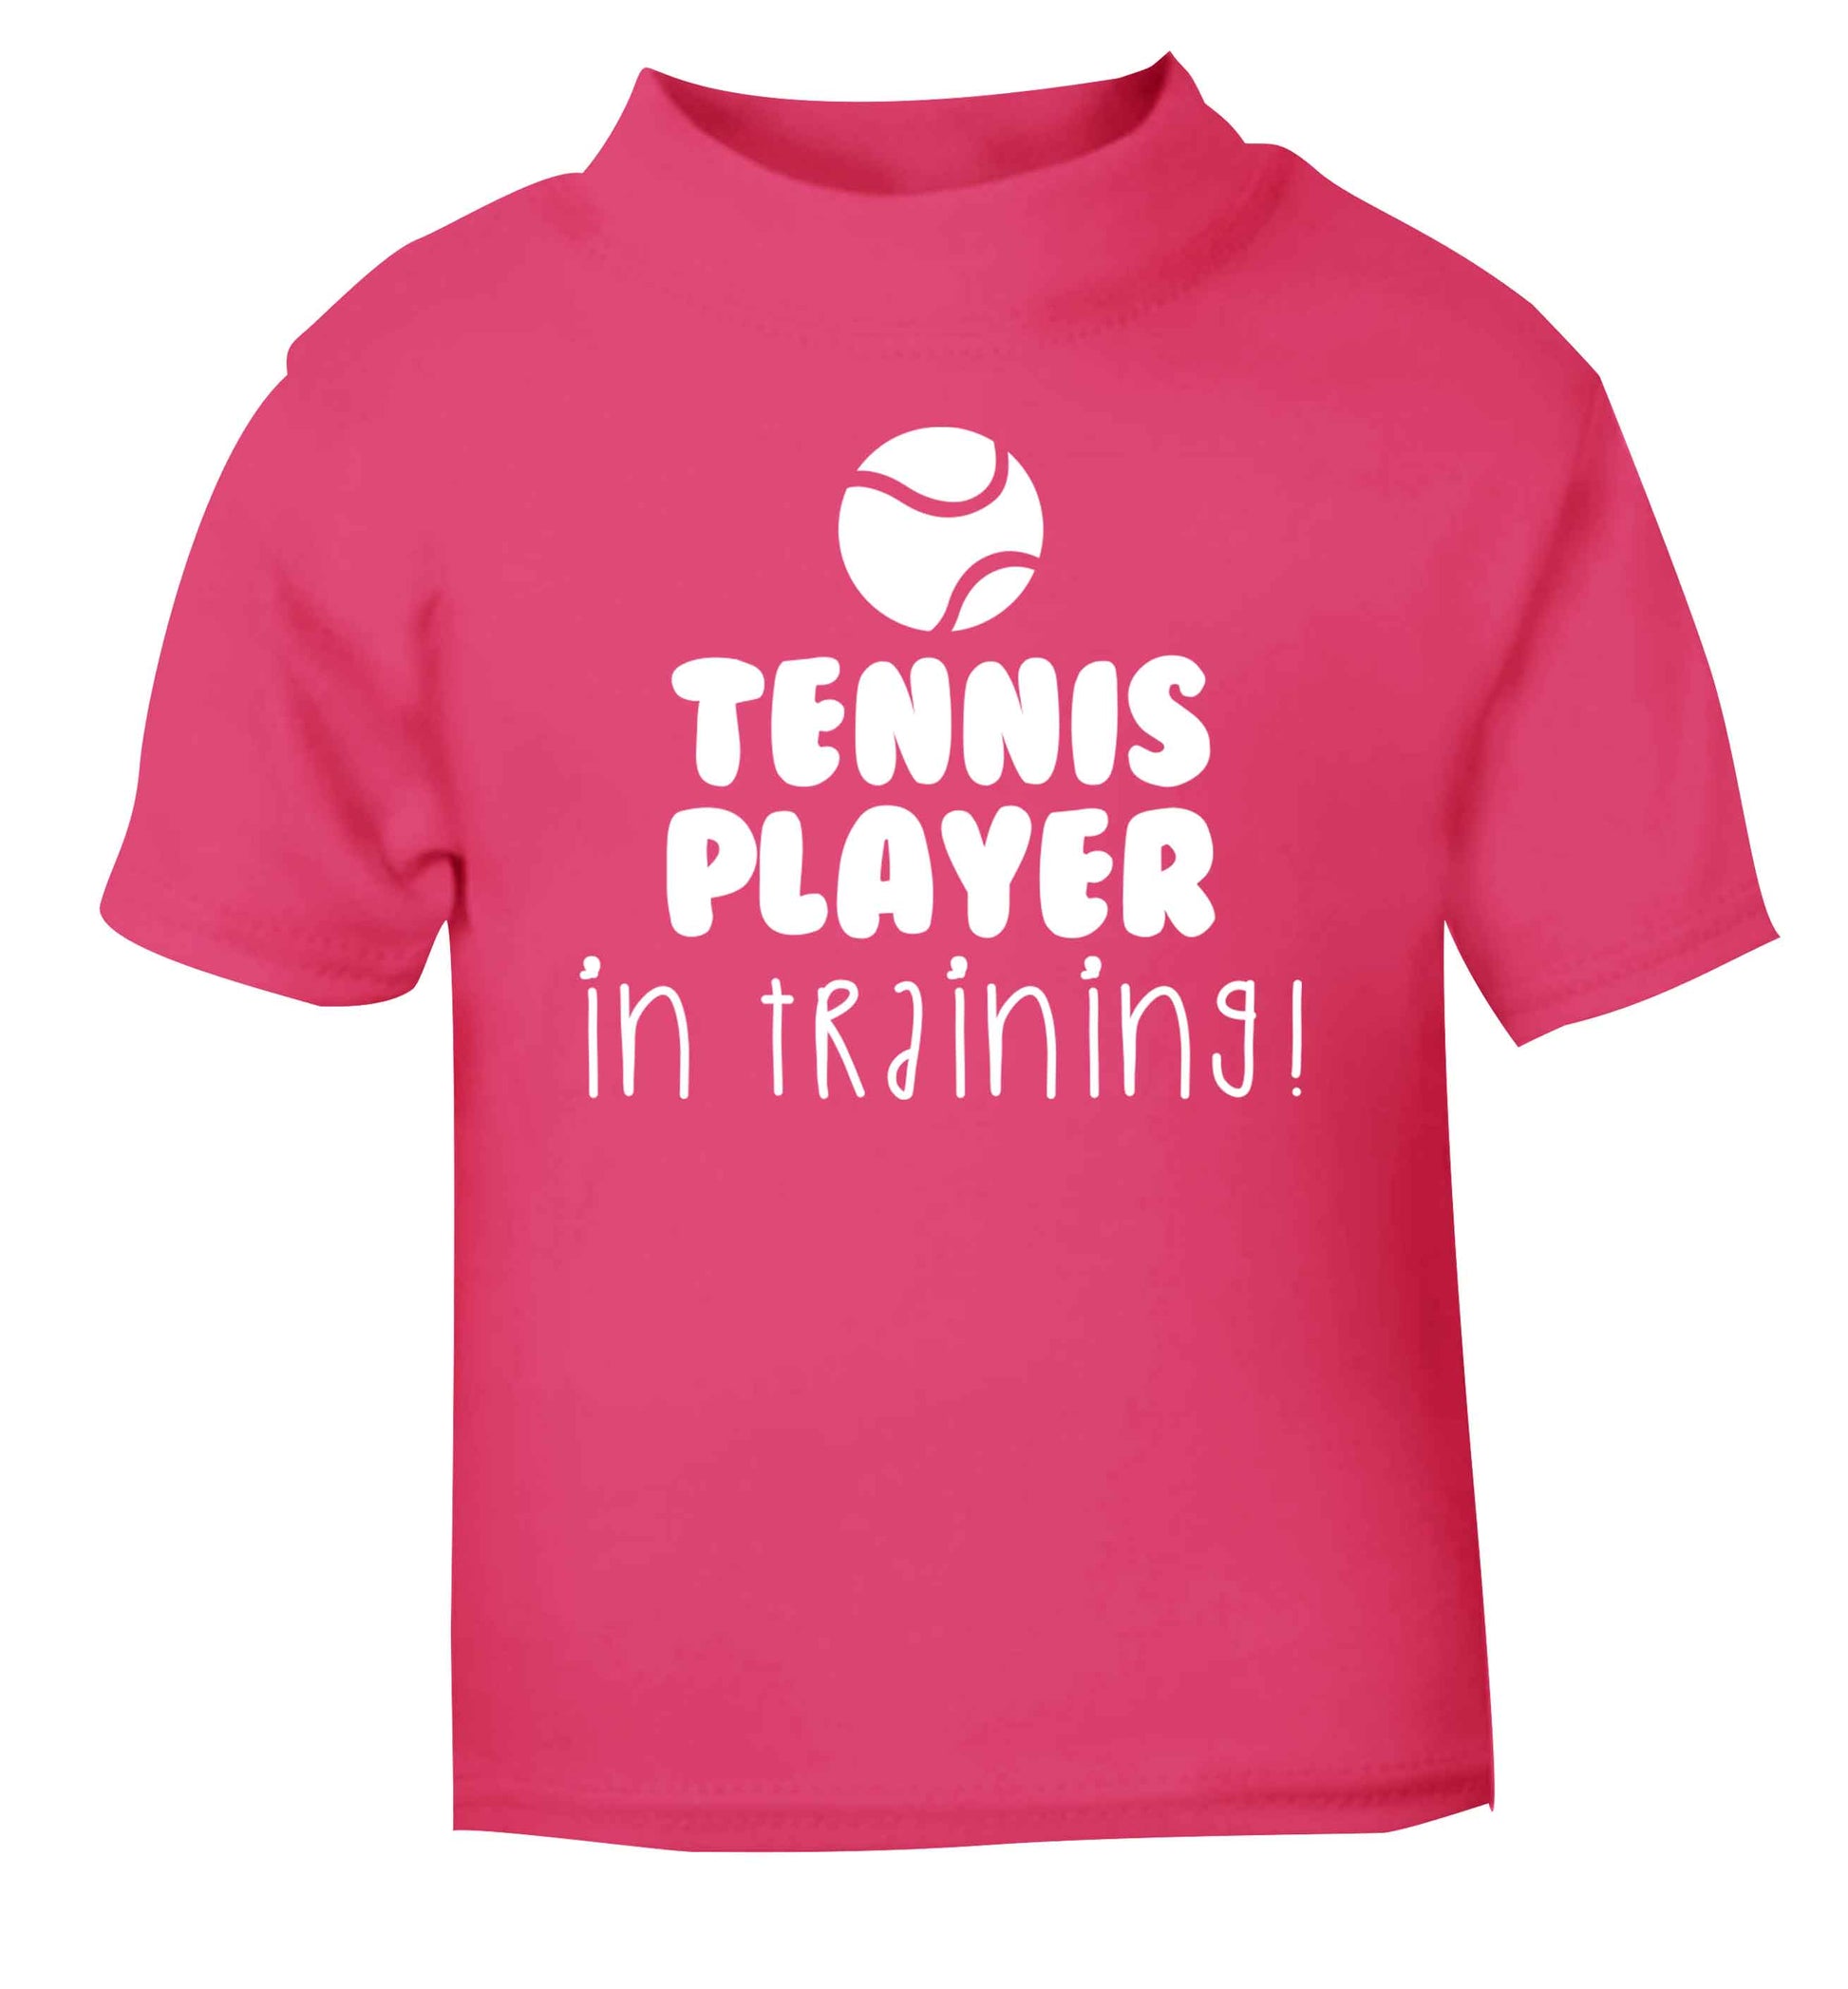 Tennis player in training pink Baby Toddler Tshirt 2 Years